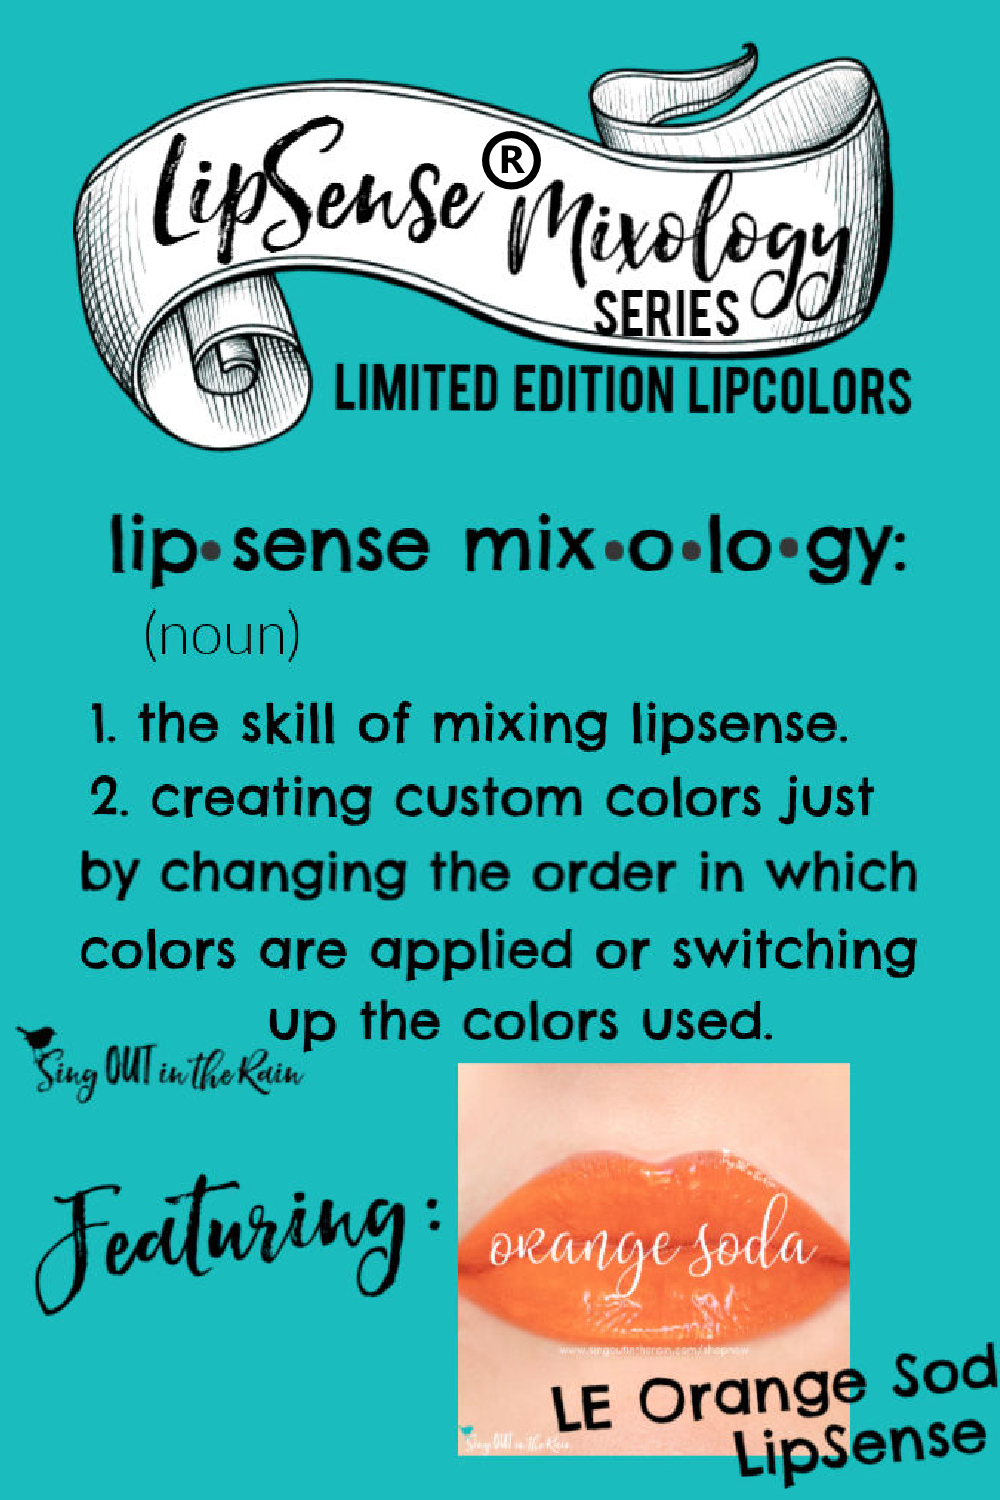 The Ultimate Guide to Orange Soda LipSense Mixology